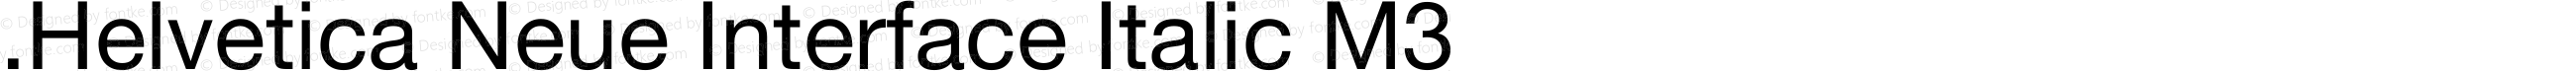 .Helvetica Neue Interface Italic M3